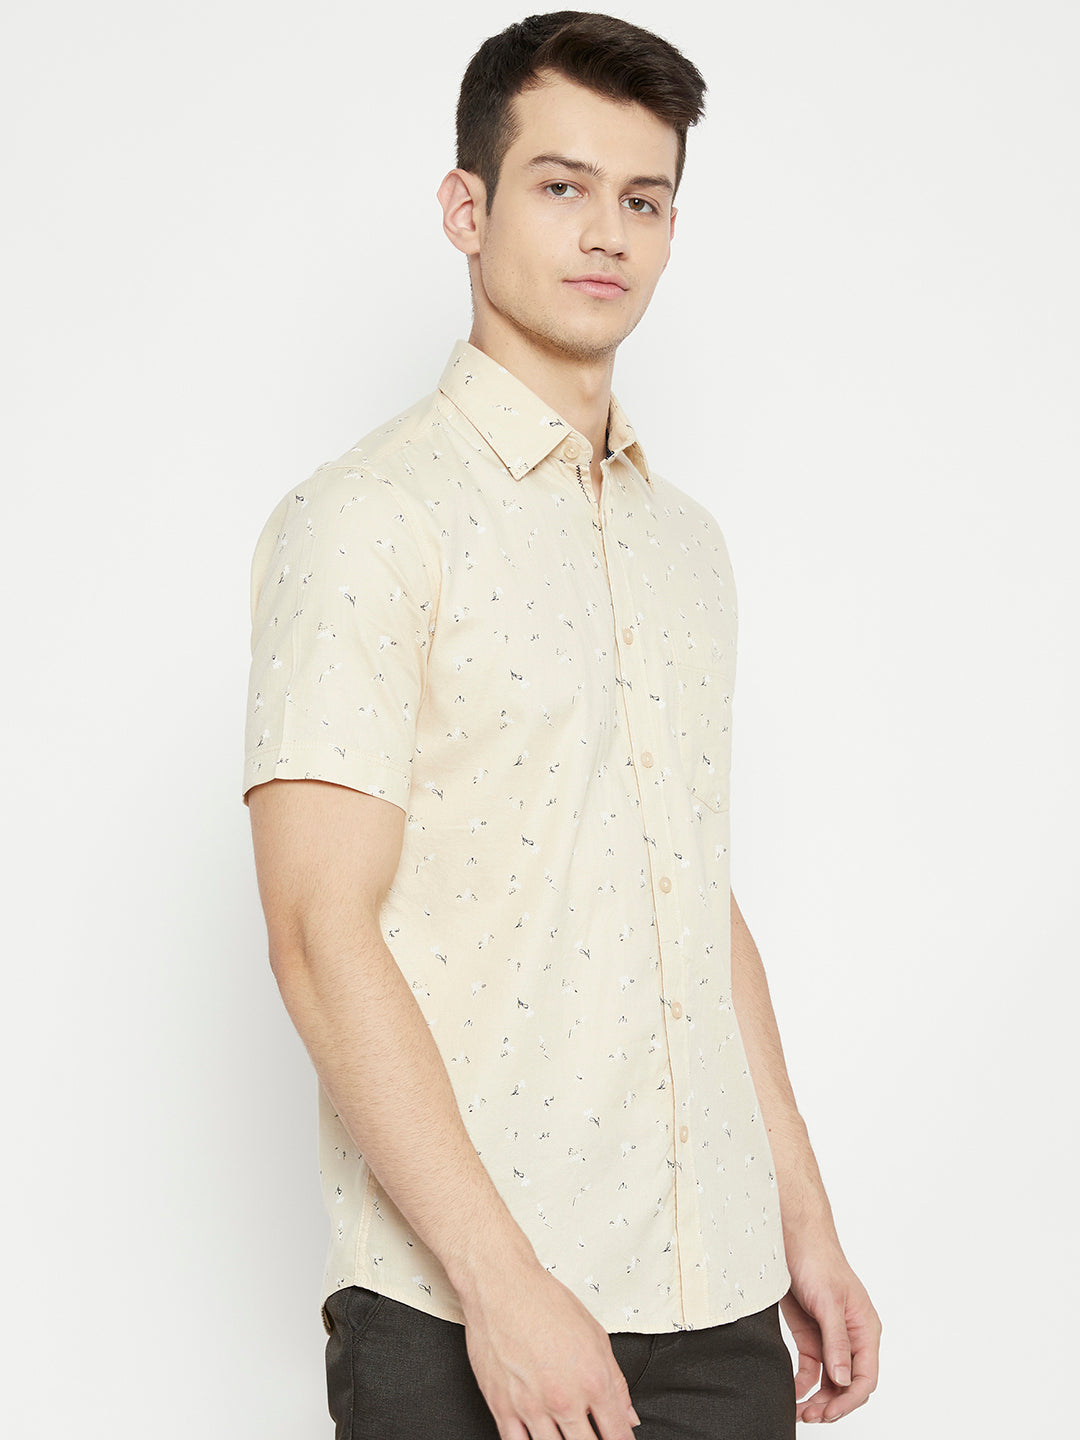 Cream Floral Printed Slim Fit shirt - Men Shirts